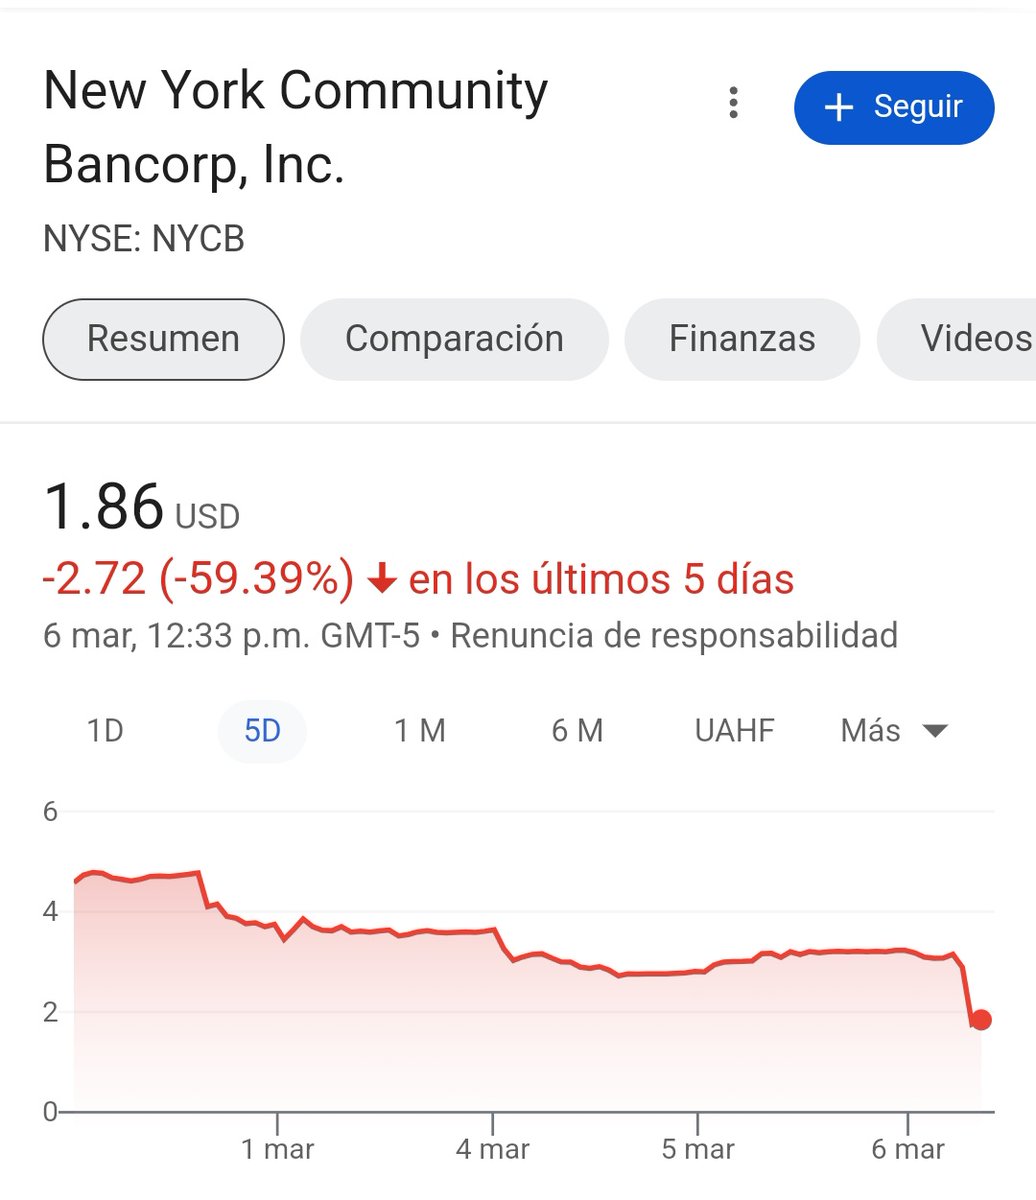 $NYCB
New York Community Bancorp -42.24%🔴 today 
#BankingCrisis #Bankcollapse #StockMarket #StockMarketNews